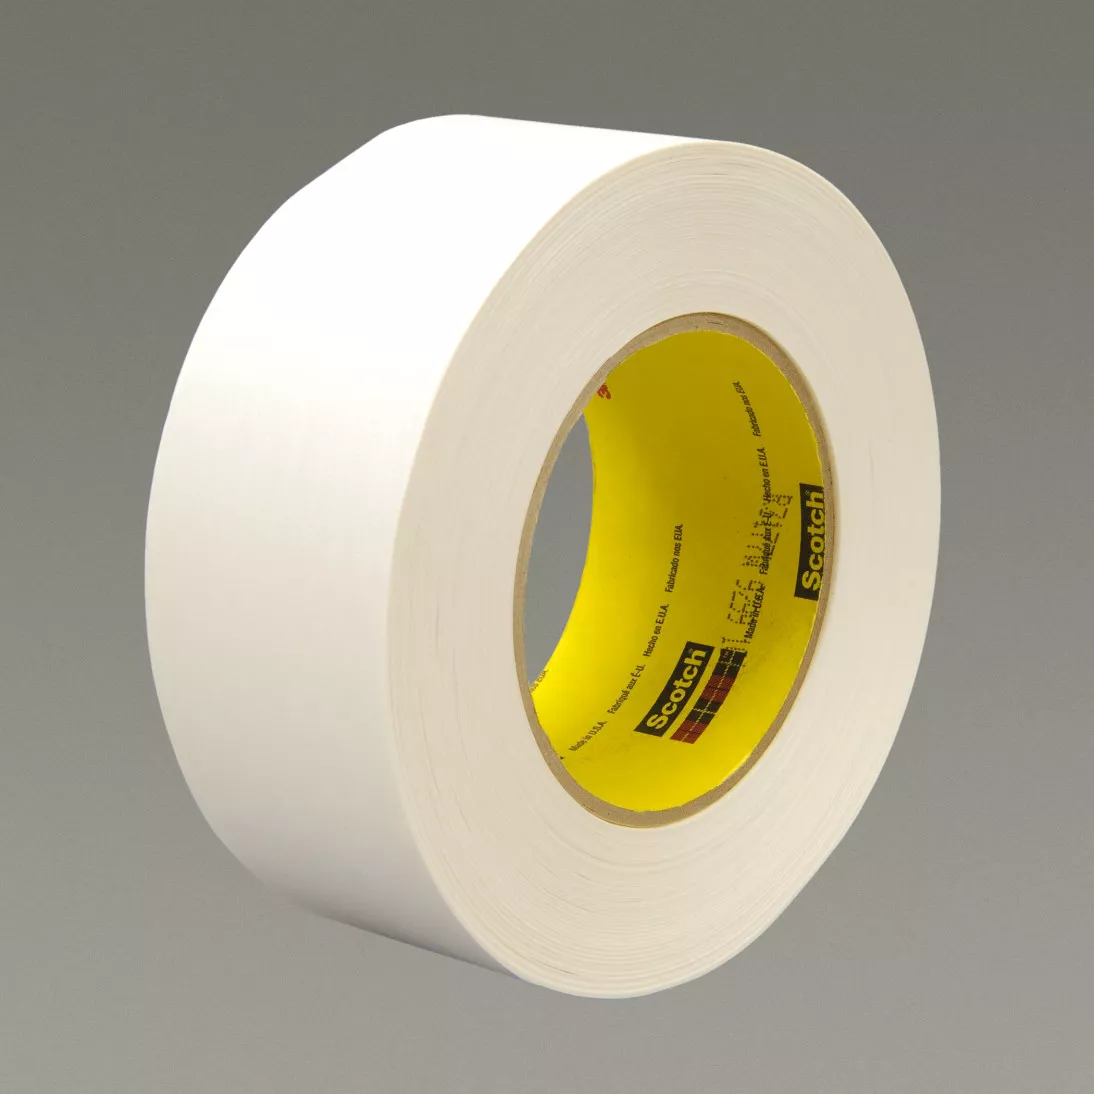 3M™ Repulpable Super Strength Single Coated Tape R3177, White, 72 mm x
55 m, 7 mil, 12 rolls per case